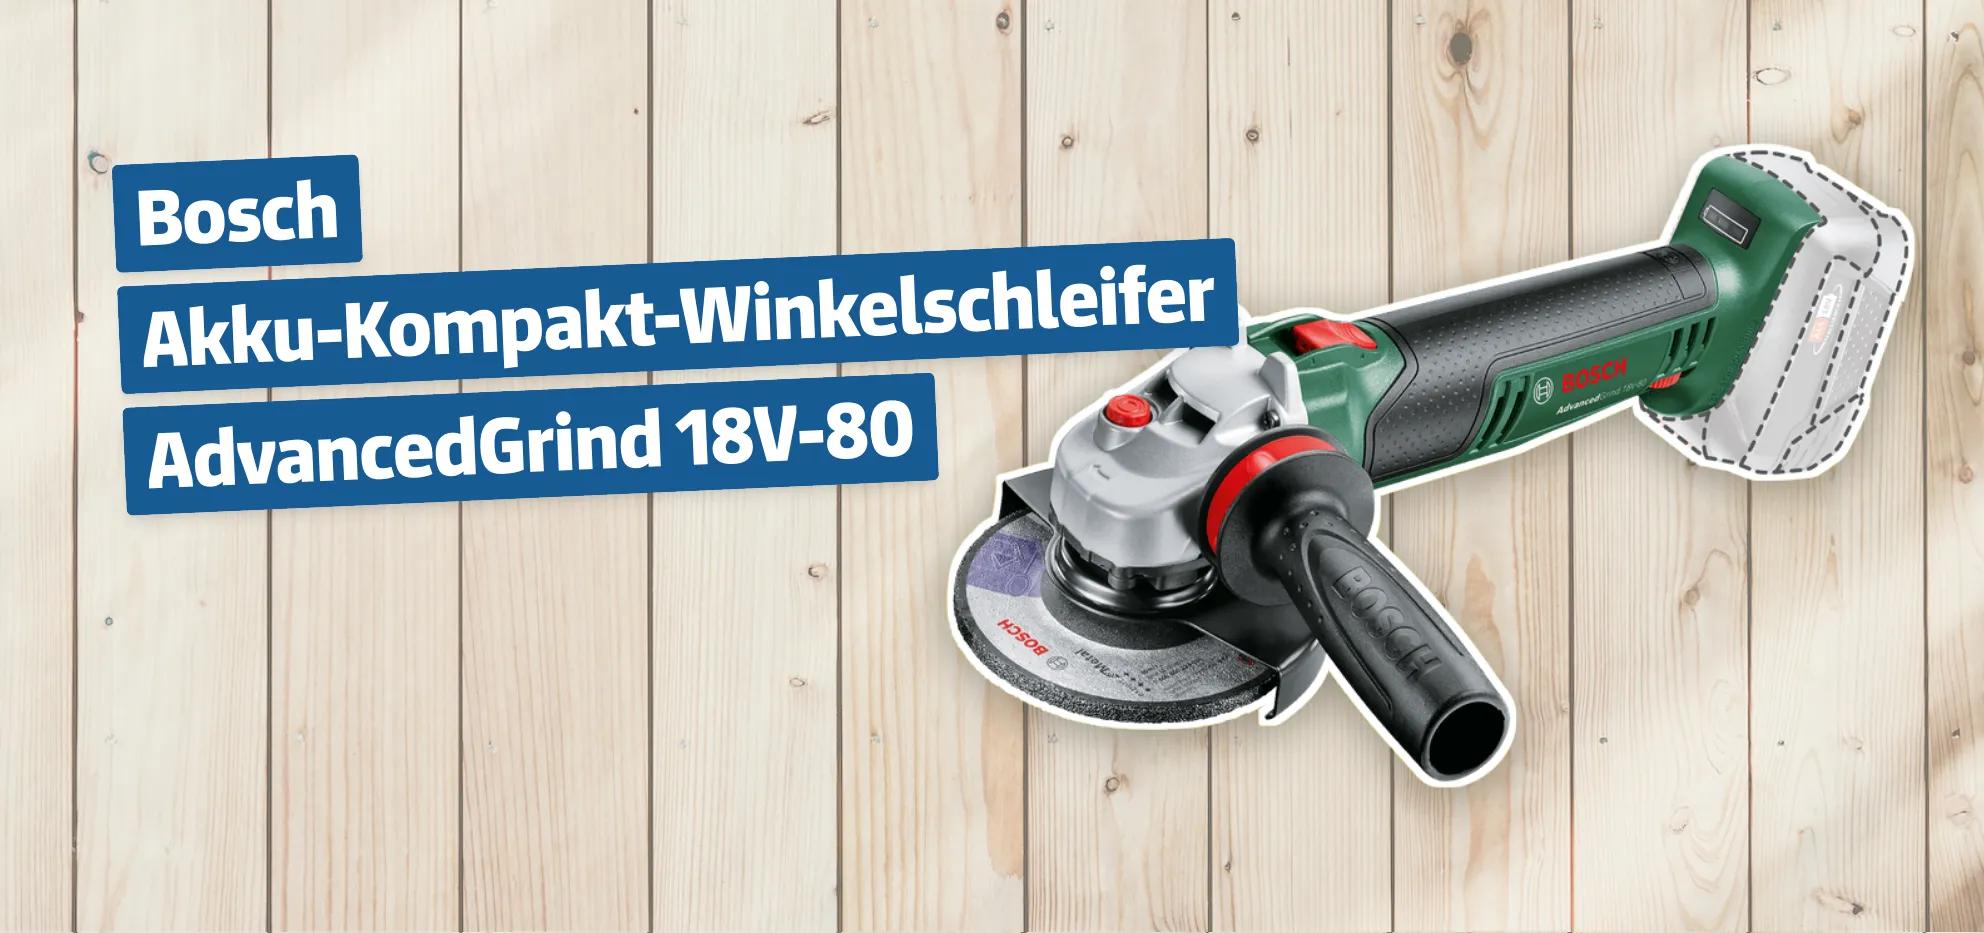 Bosch Akku-Kompakt-Winkelschleifer AdvancedGrind 18V-80